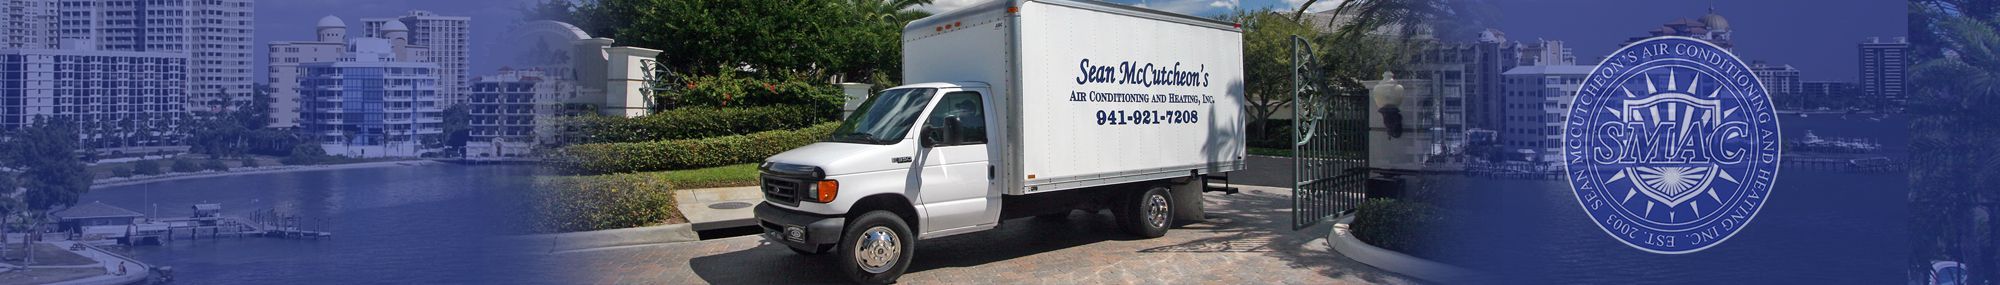 Sean McCutcheon's service vehicle and Sarasota skyline collage.